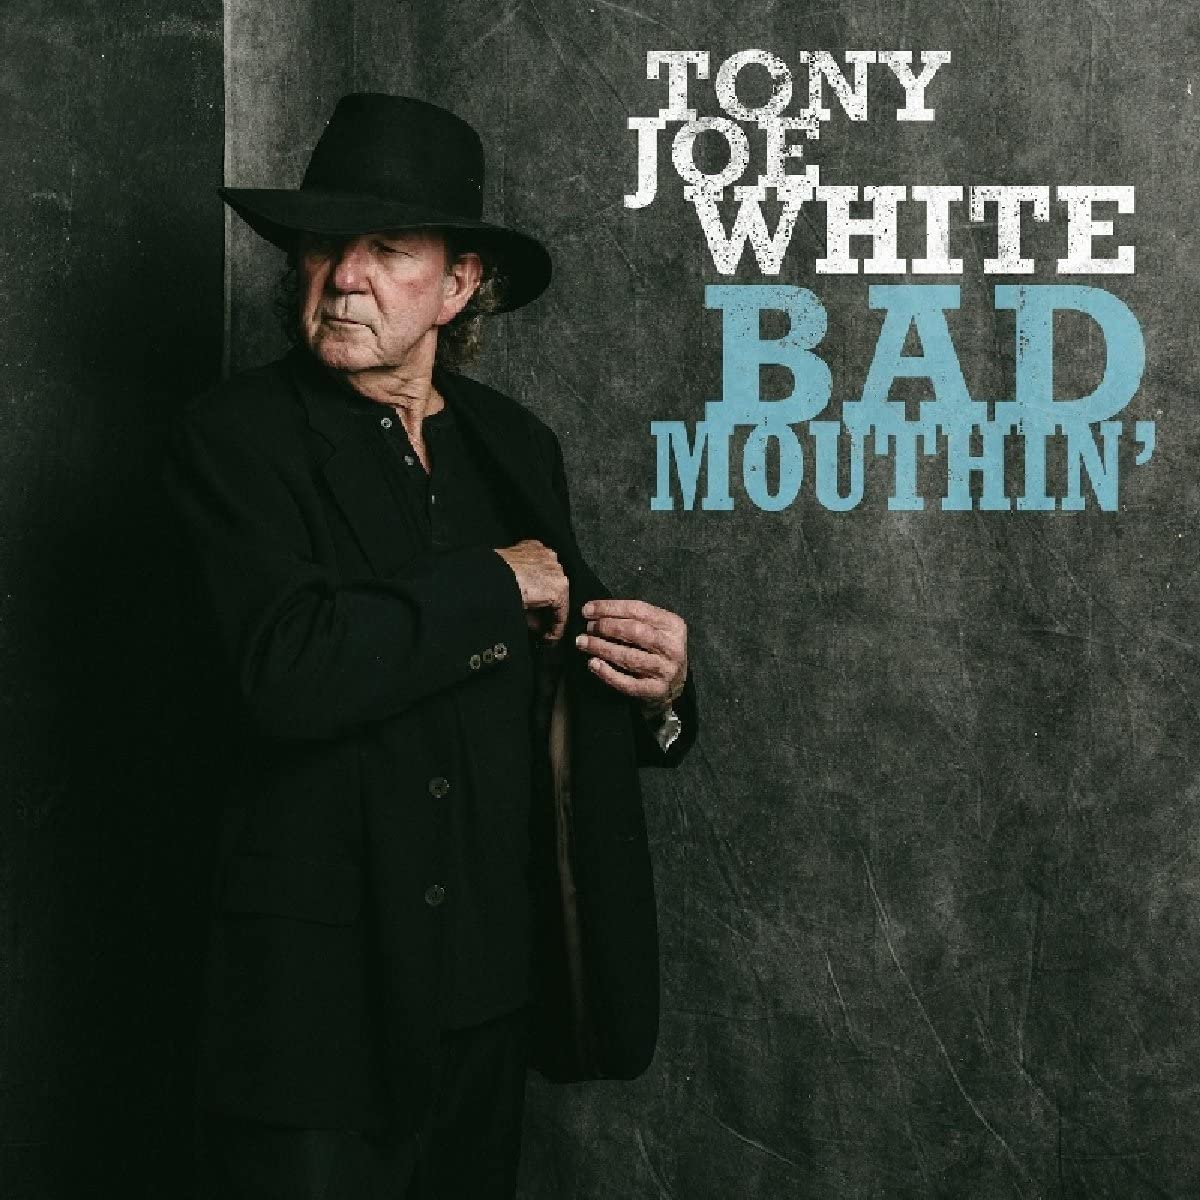 White, Tony Joe/Bad Mouthin' [LP]